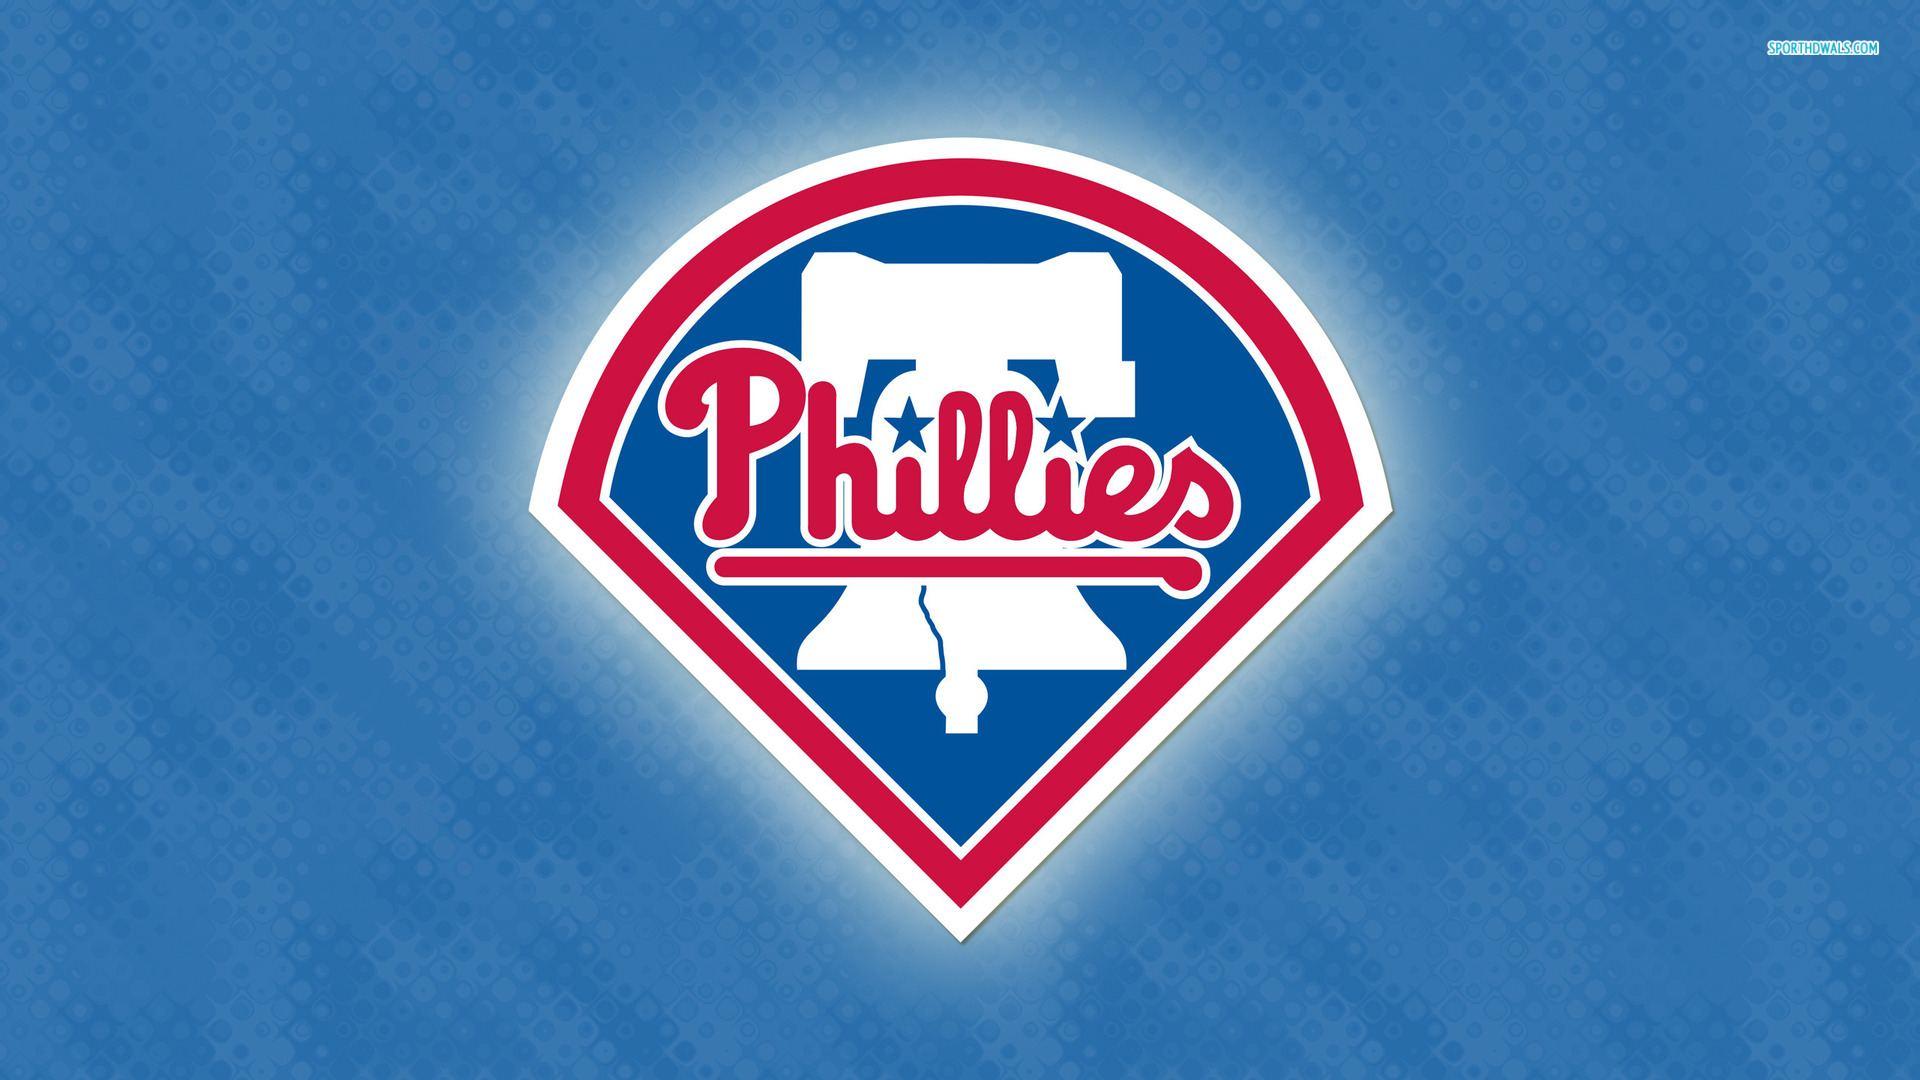 Philadelphia Phillies wallpaper HD free download